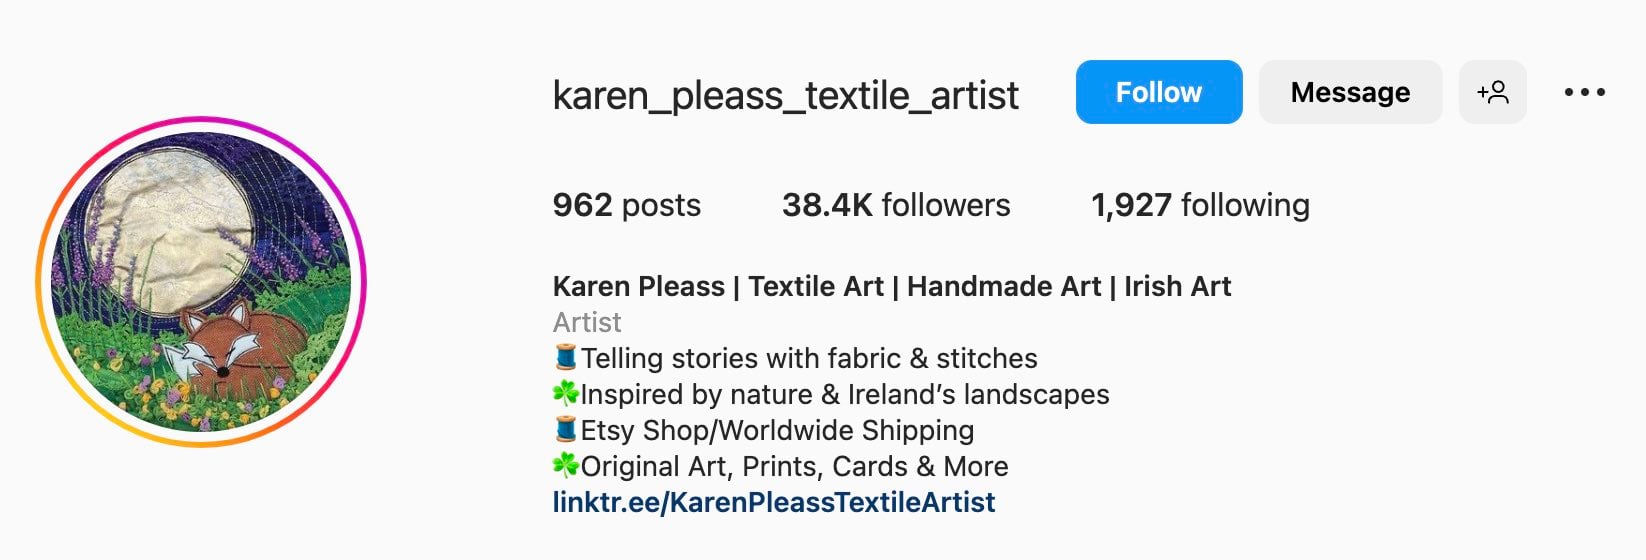 Creative Instagram bio ideas for Etsy shops, karen pleass